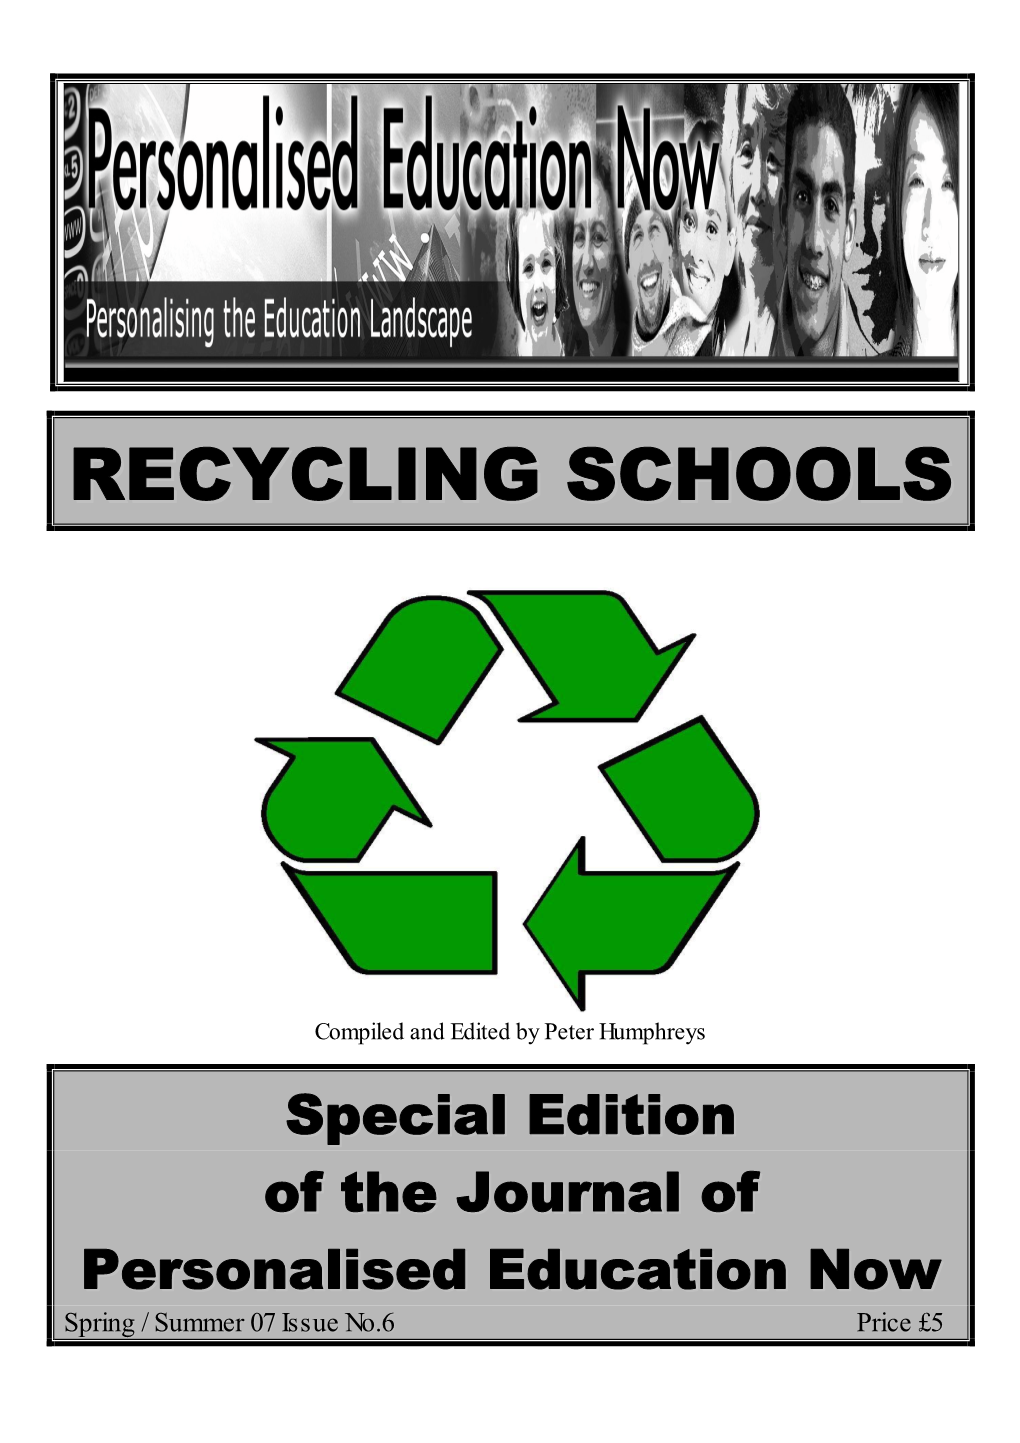 PEN Journal 6. 2007. RECYCLING SCHOOLS